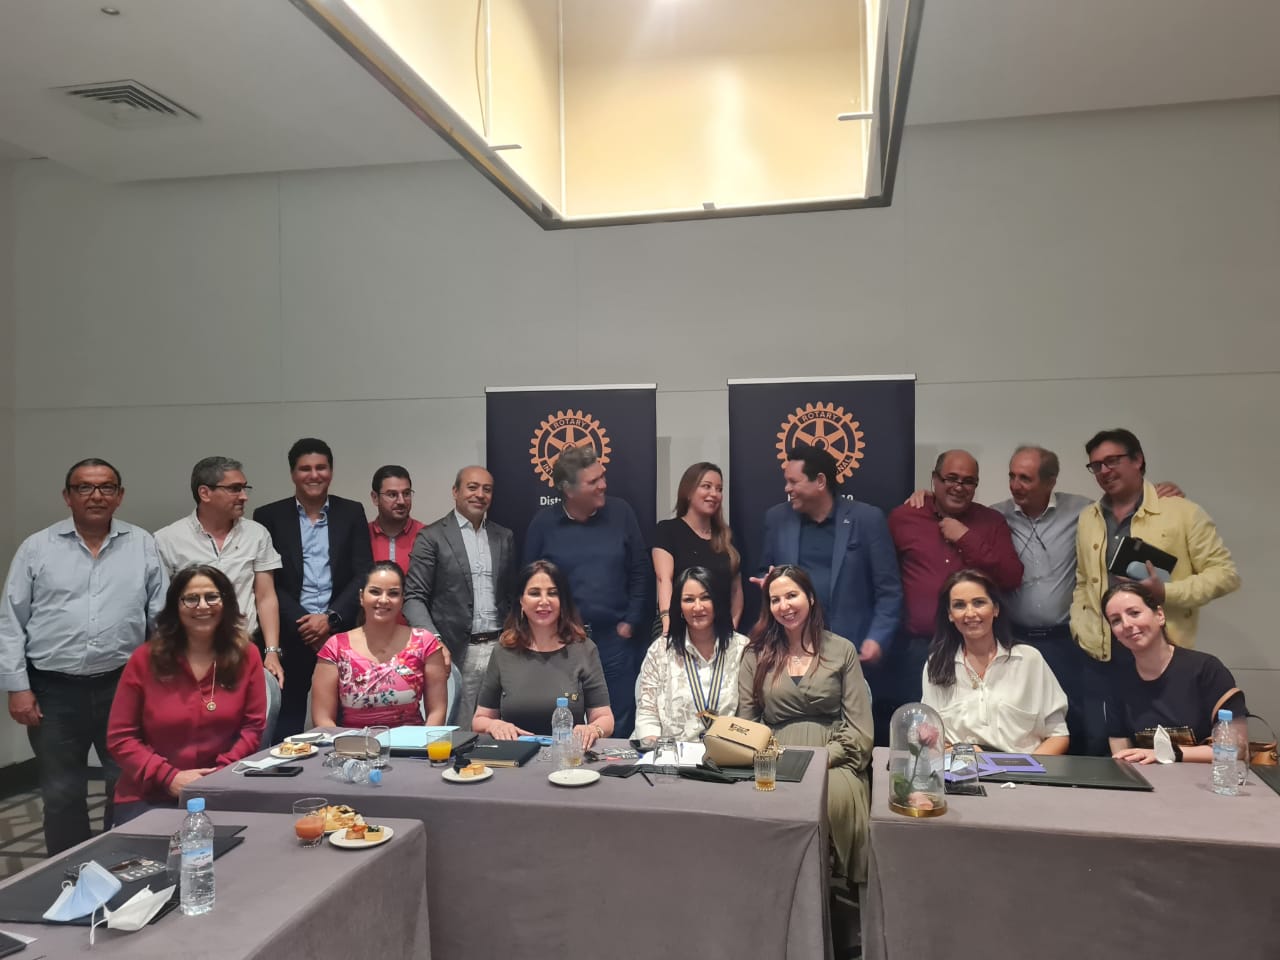 La santé au programme du Rotary club Ryad Ennakhil de Rabat